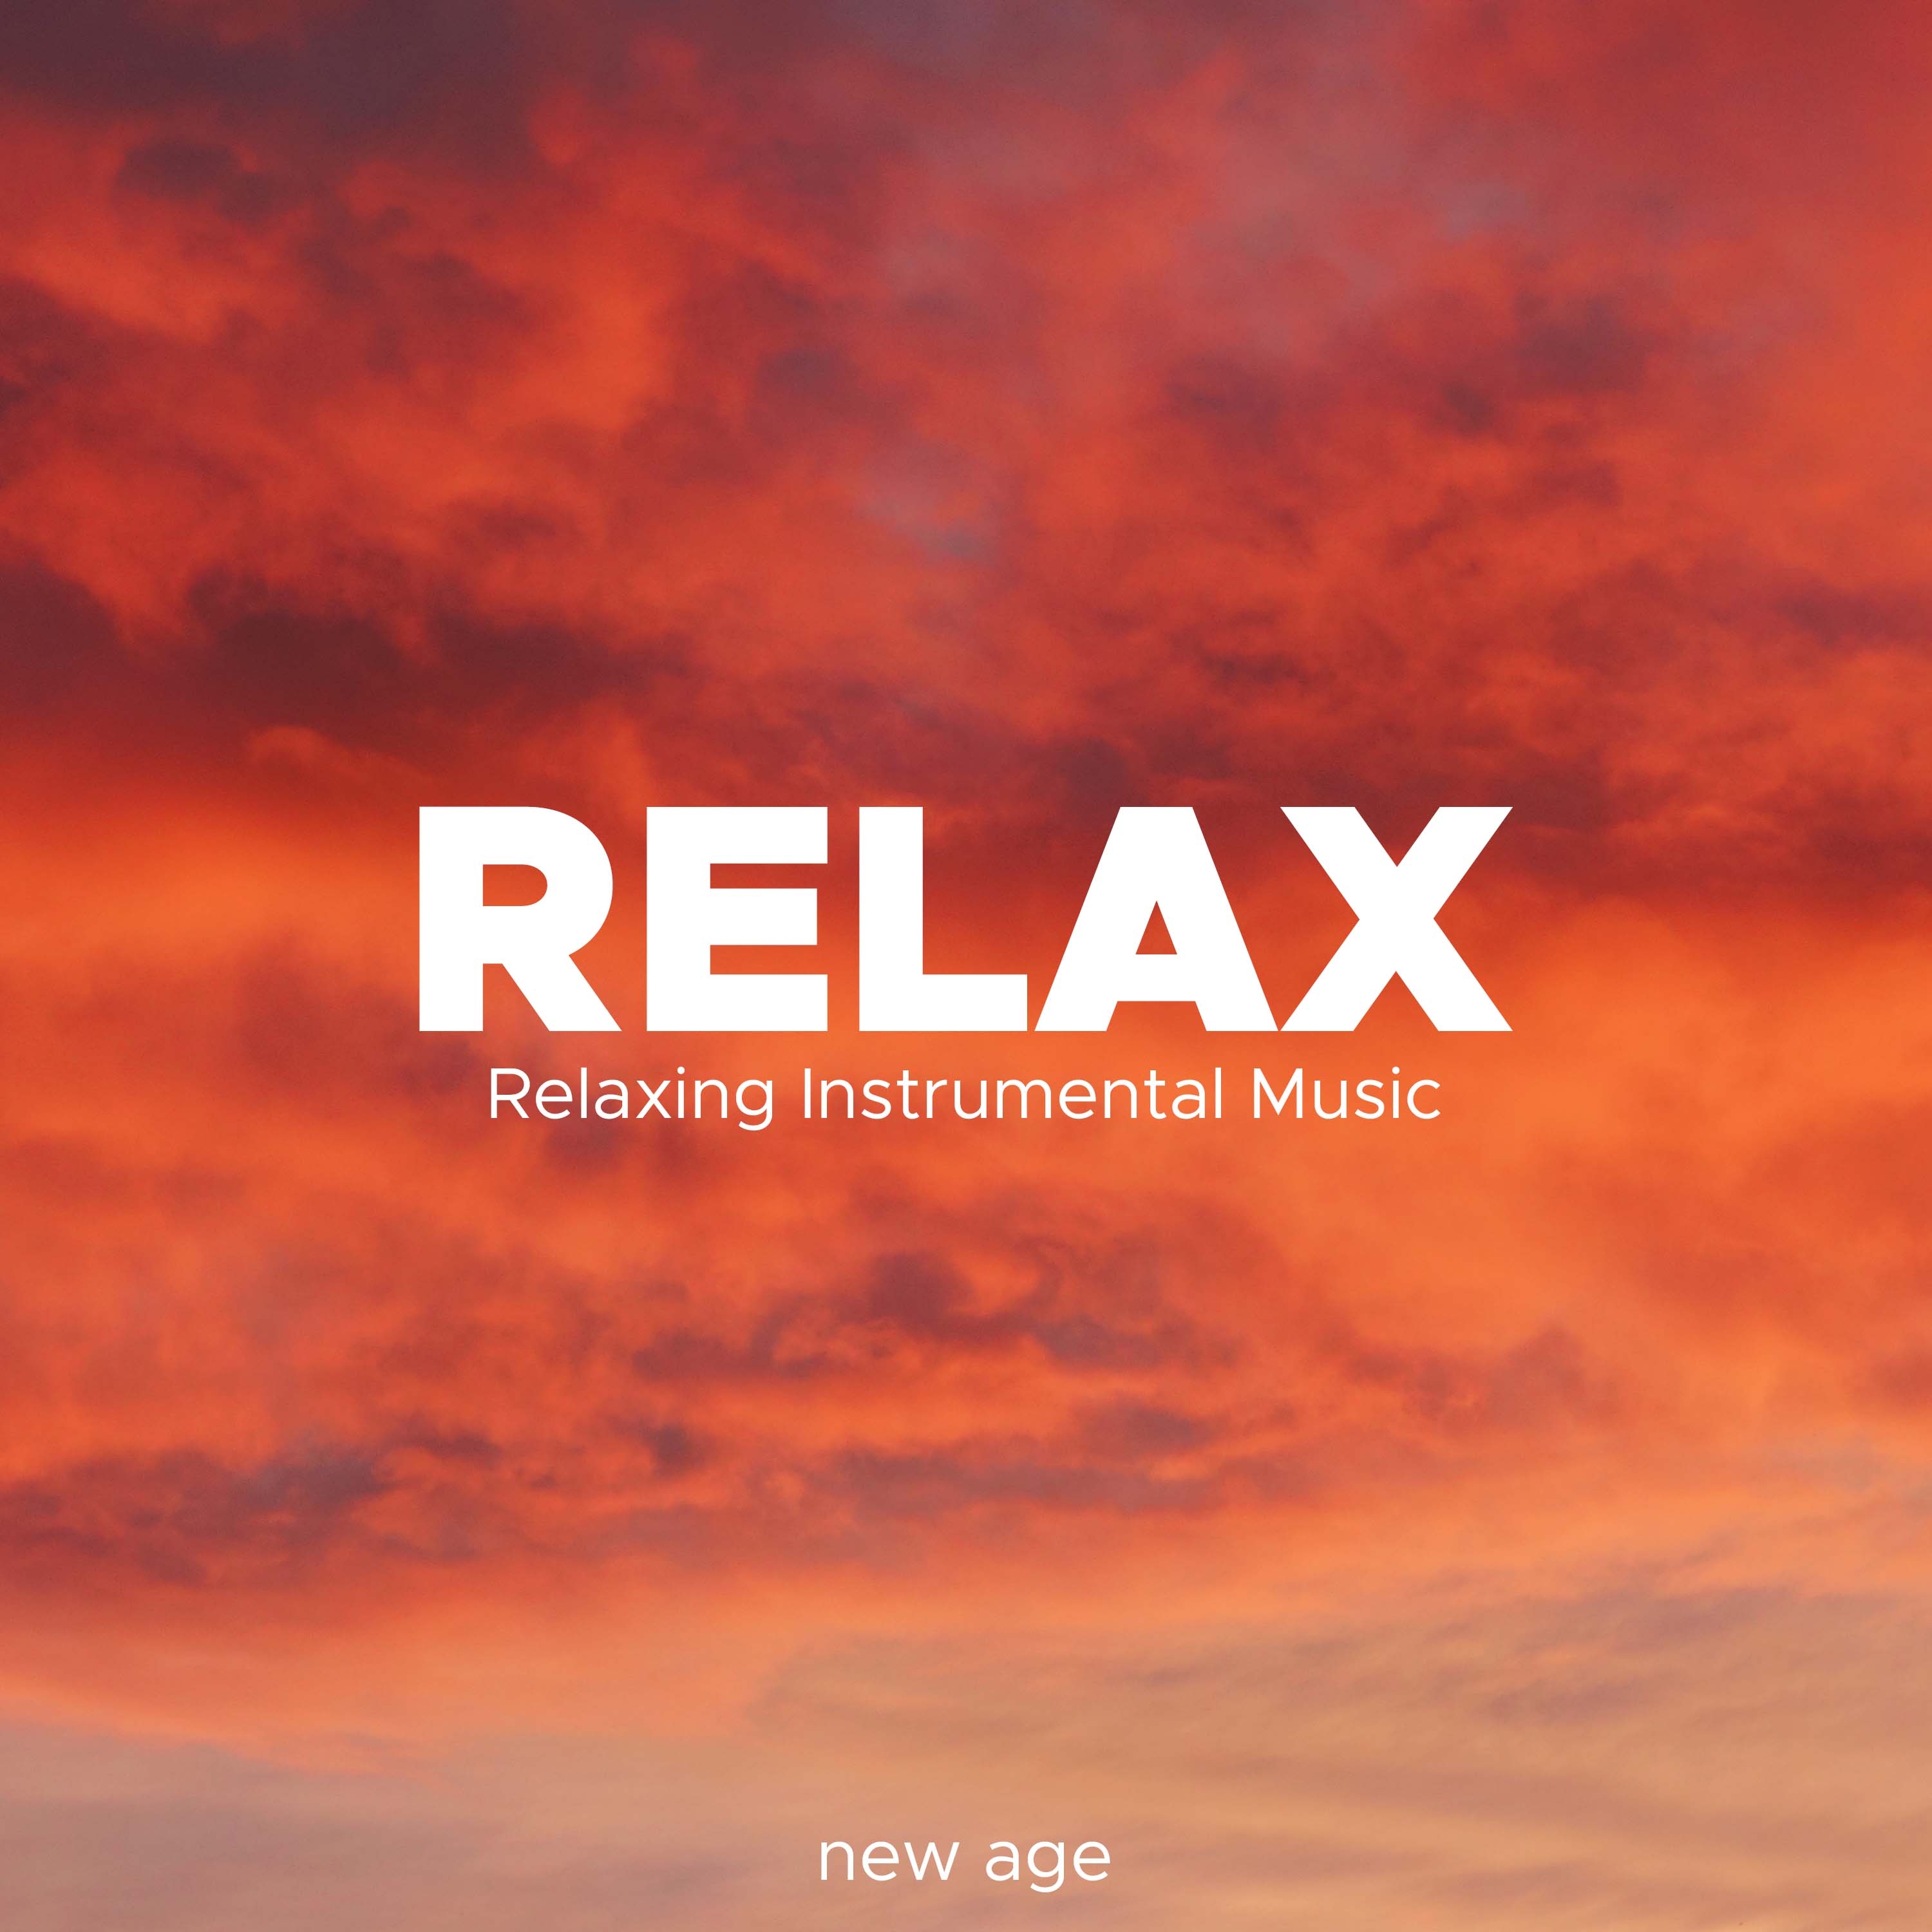 Relax - Relaxing Instrumental Music